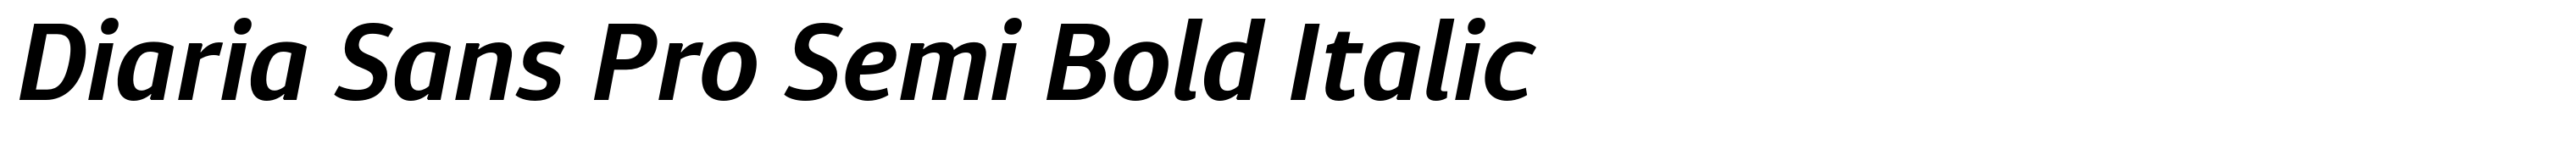 Diaria Sans Pro Semi Bold Italic